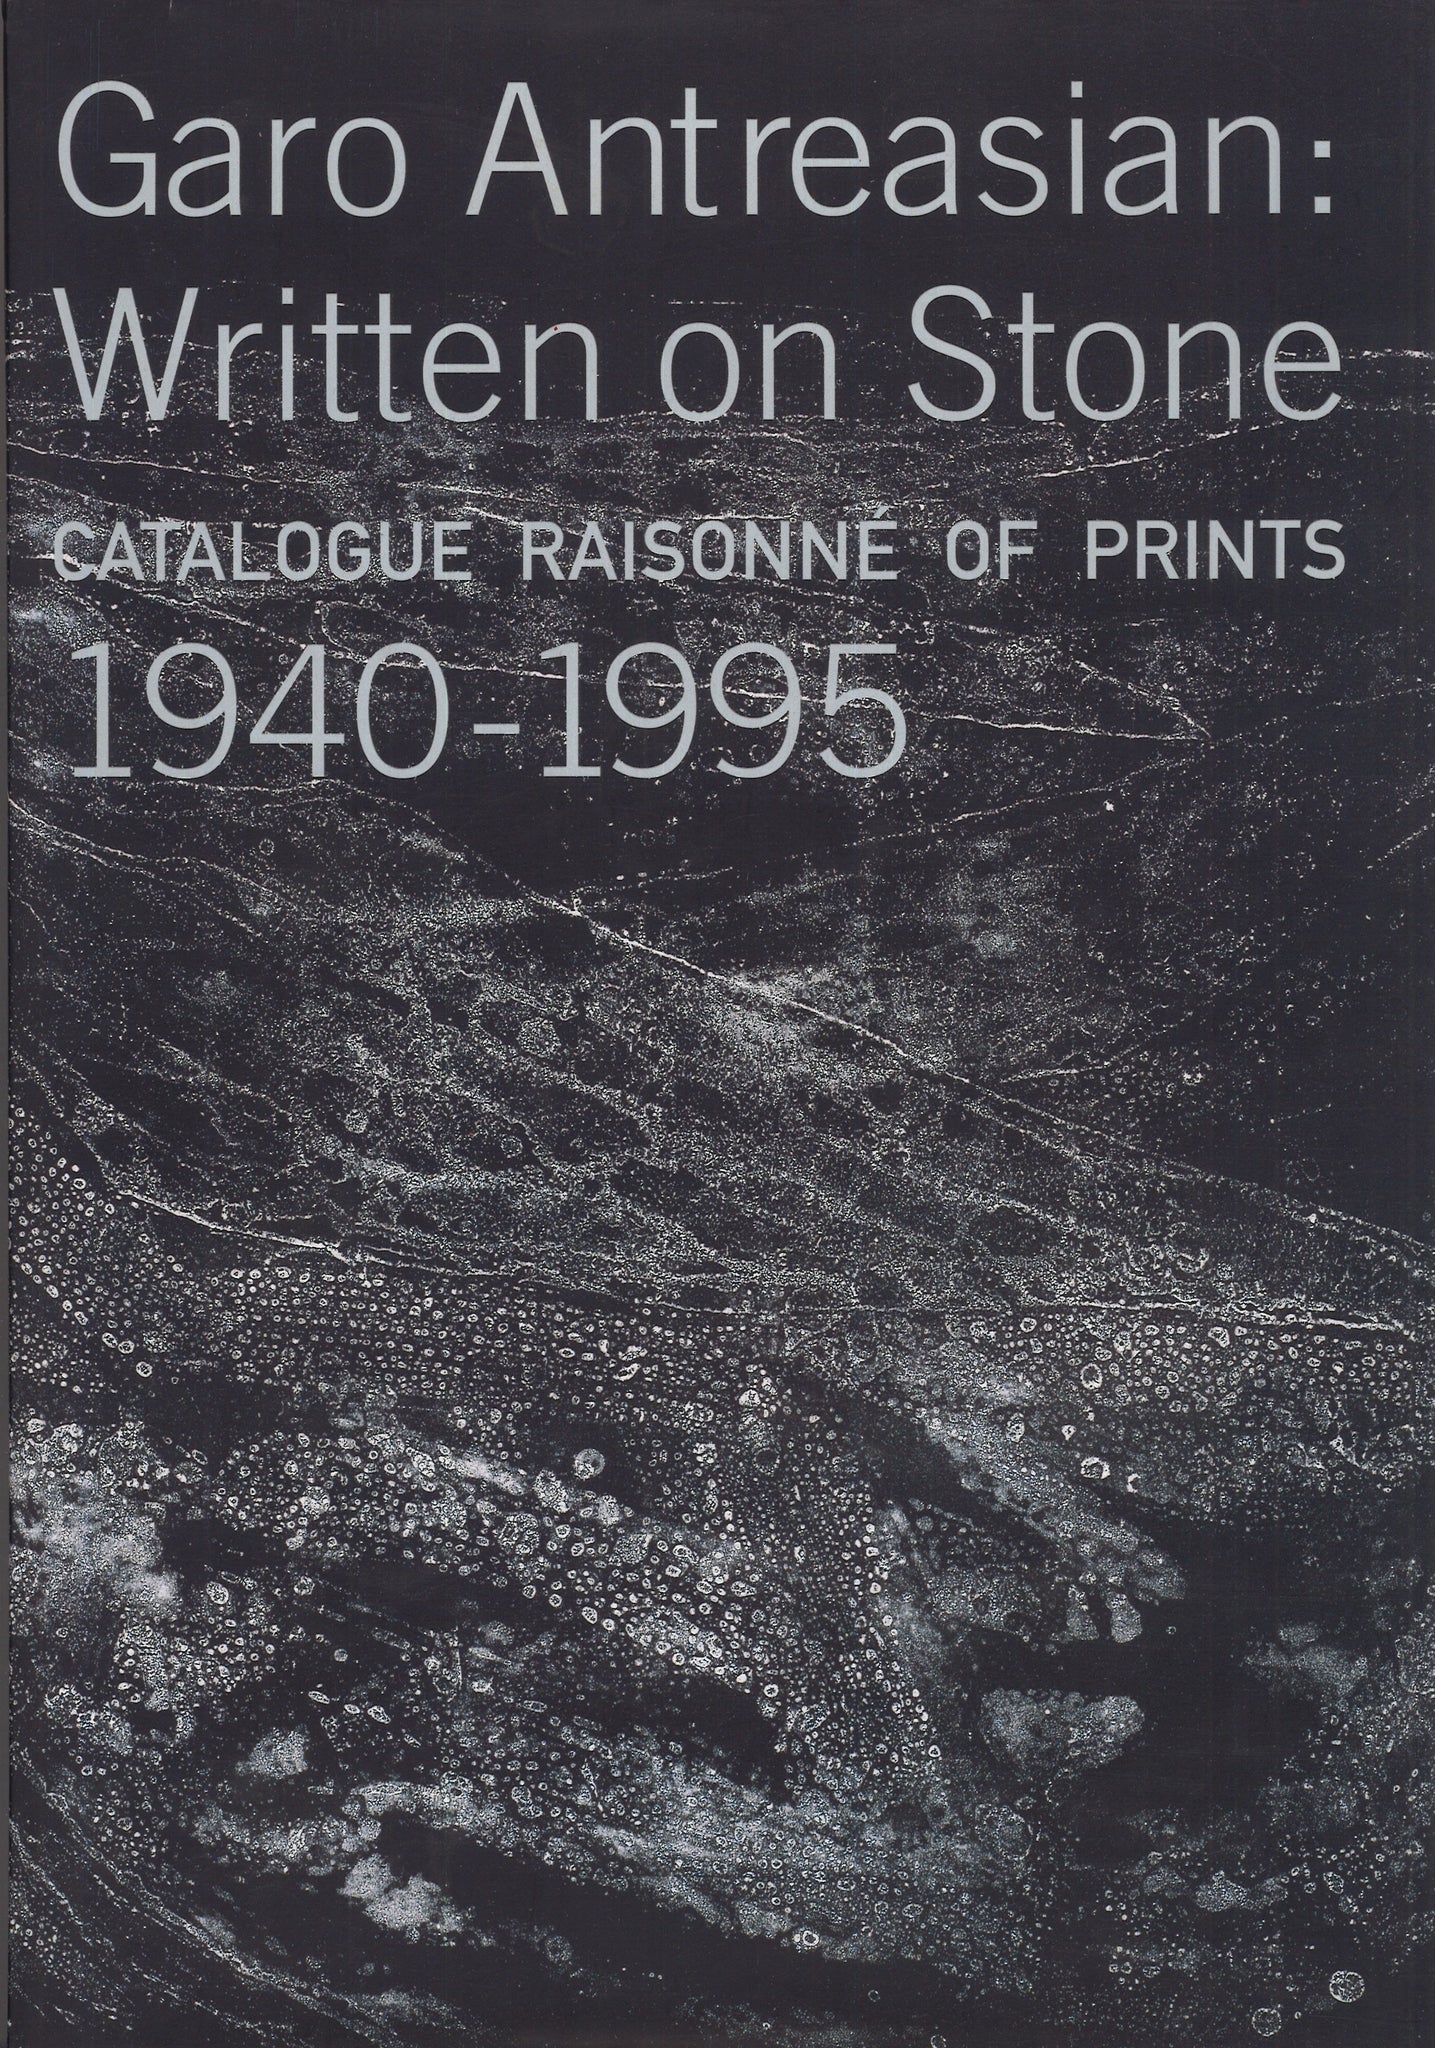 GARO ANTREASIAN: Written on Stone Catalogue Raisonne of Prints 1940-1995